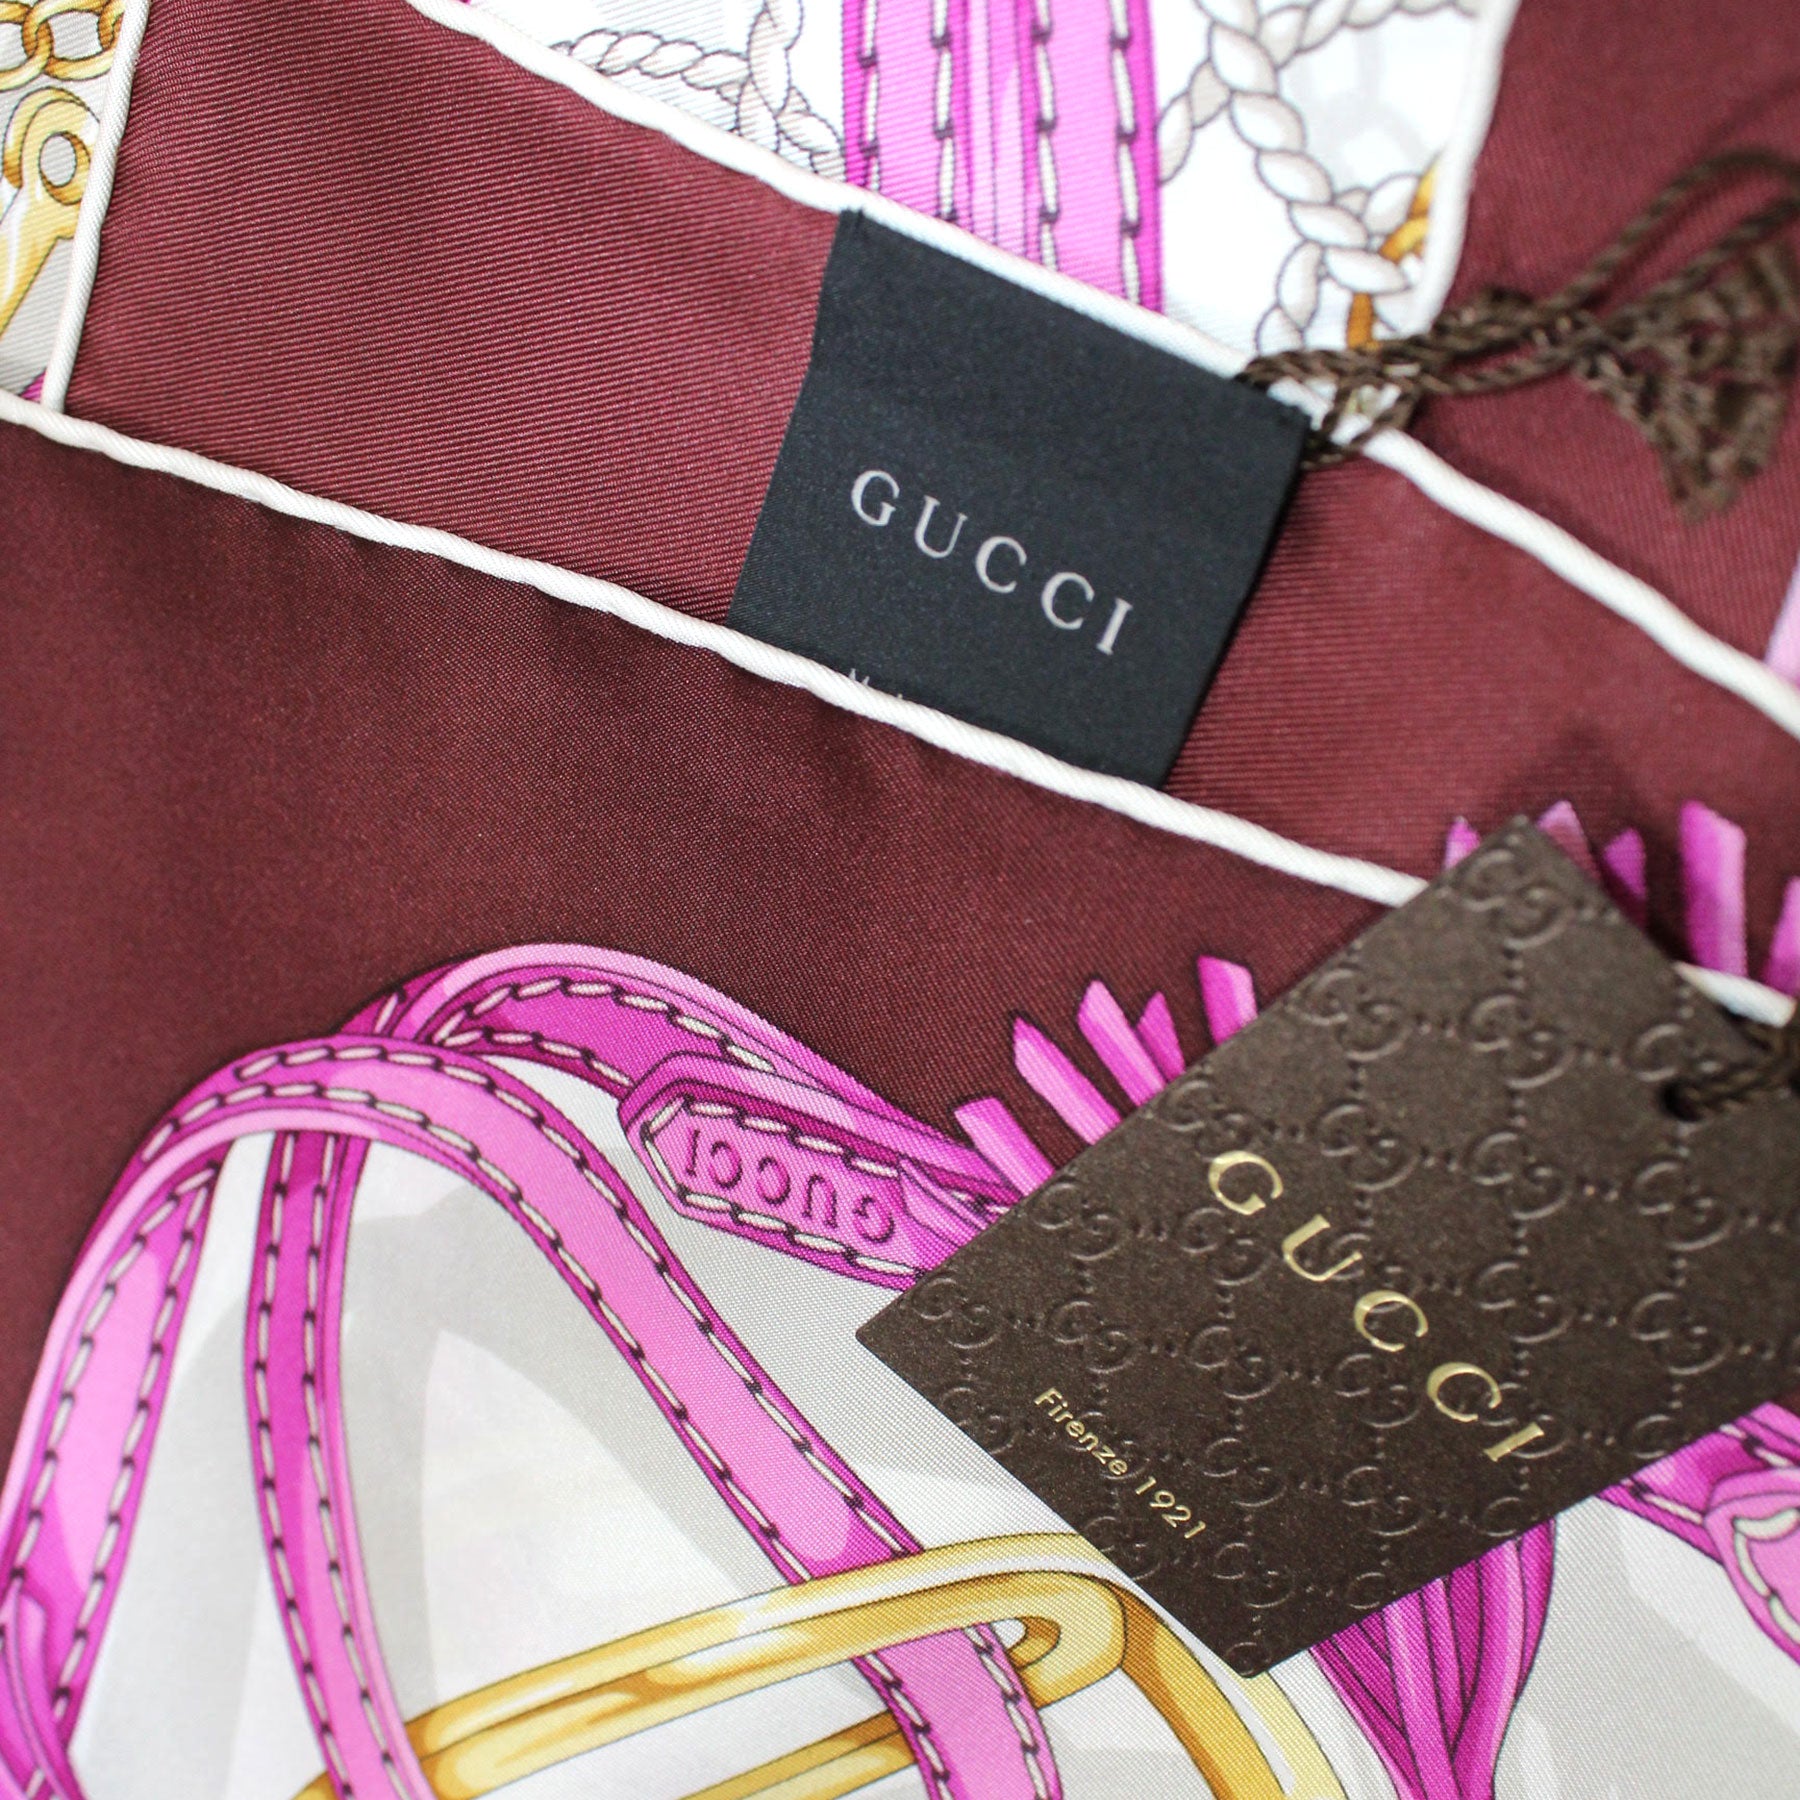 Gucci Scarf Maroon Pink Gold Equestrian Design - 36 inch Square Twill Silk Scarf